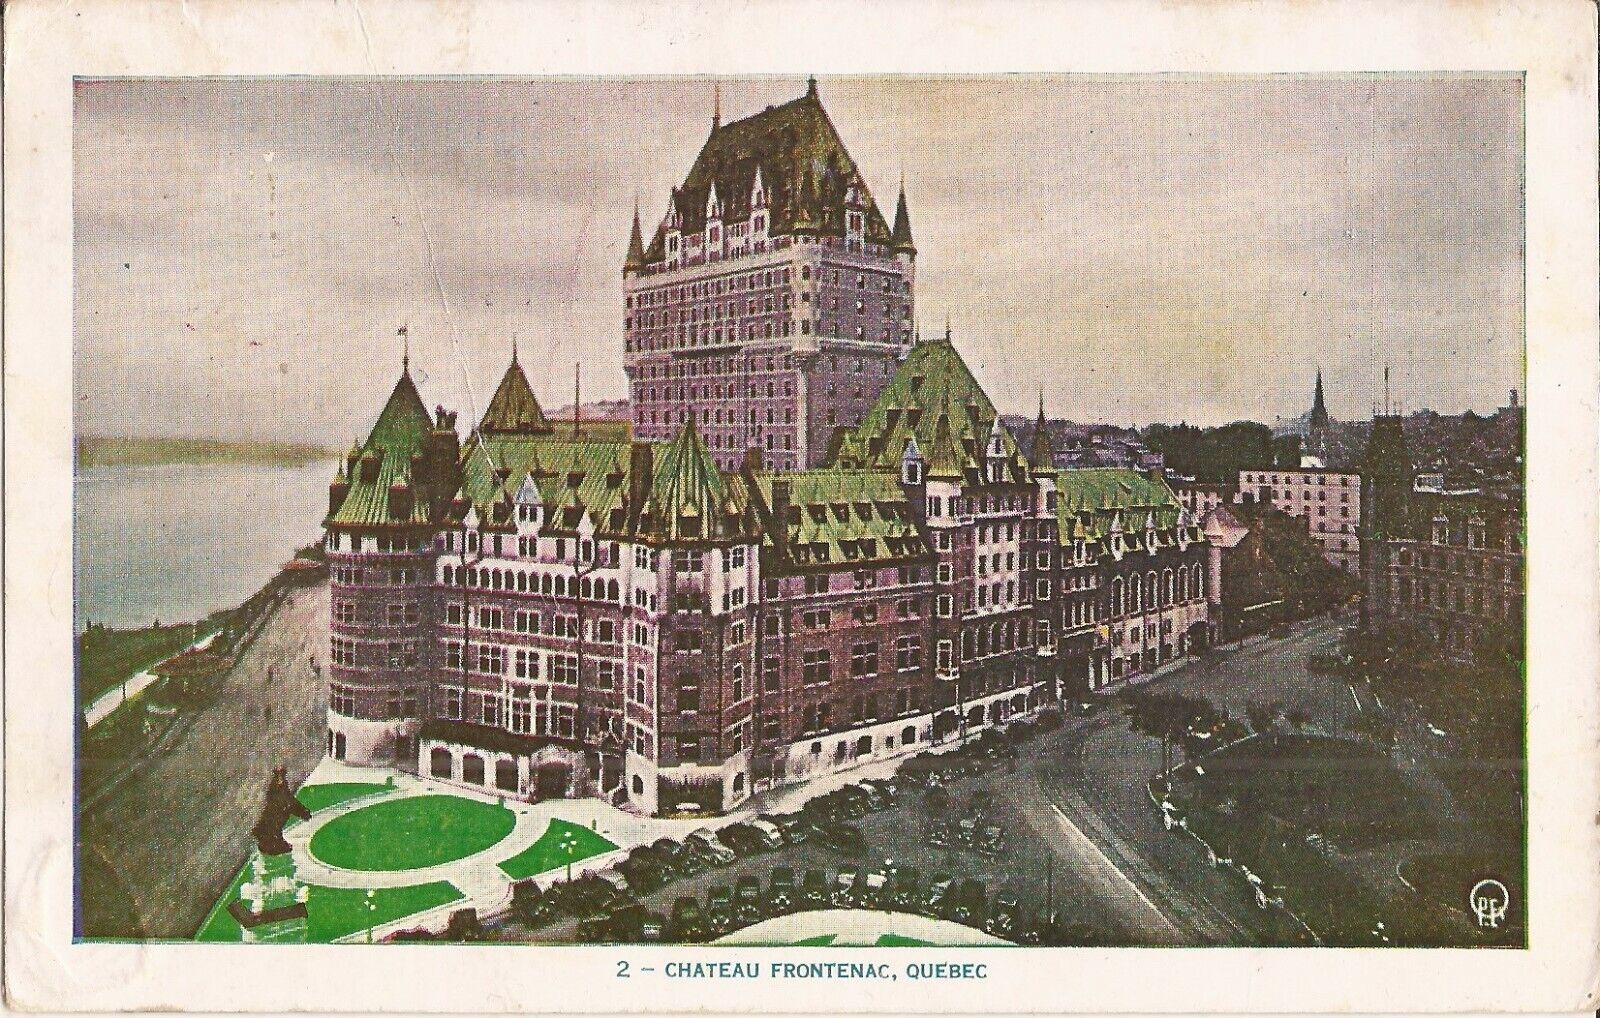 Quebec City, CANADA - Chateau Frontenac - 1957 - ARCHITECTURE